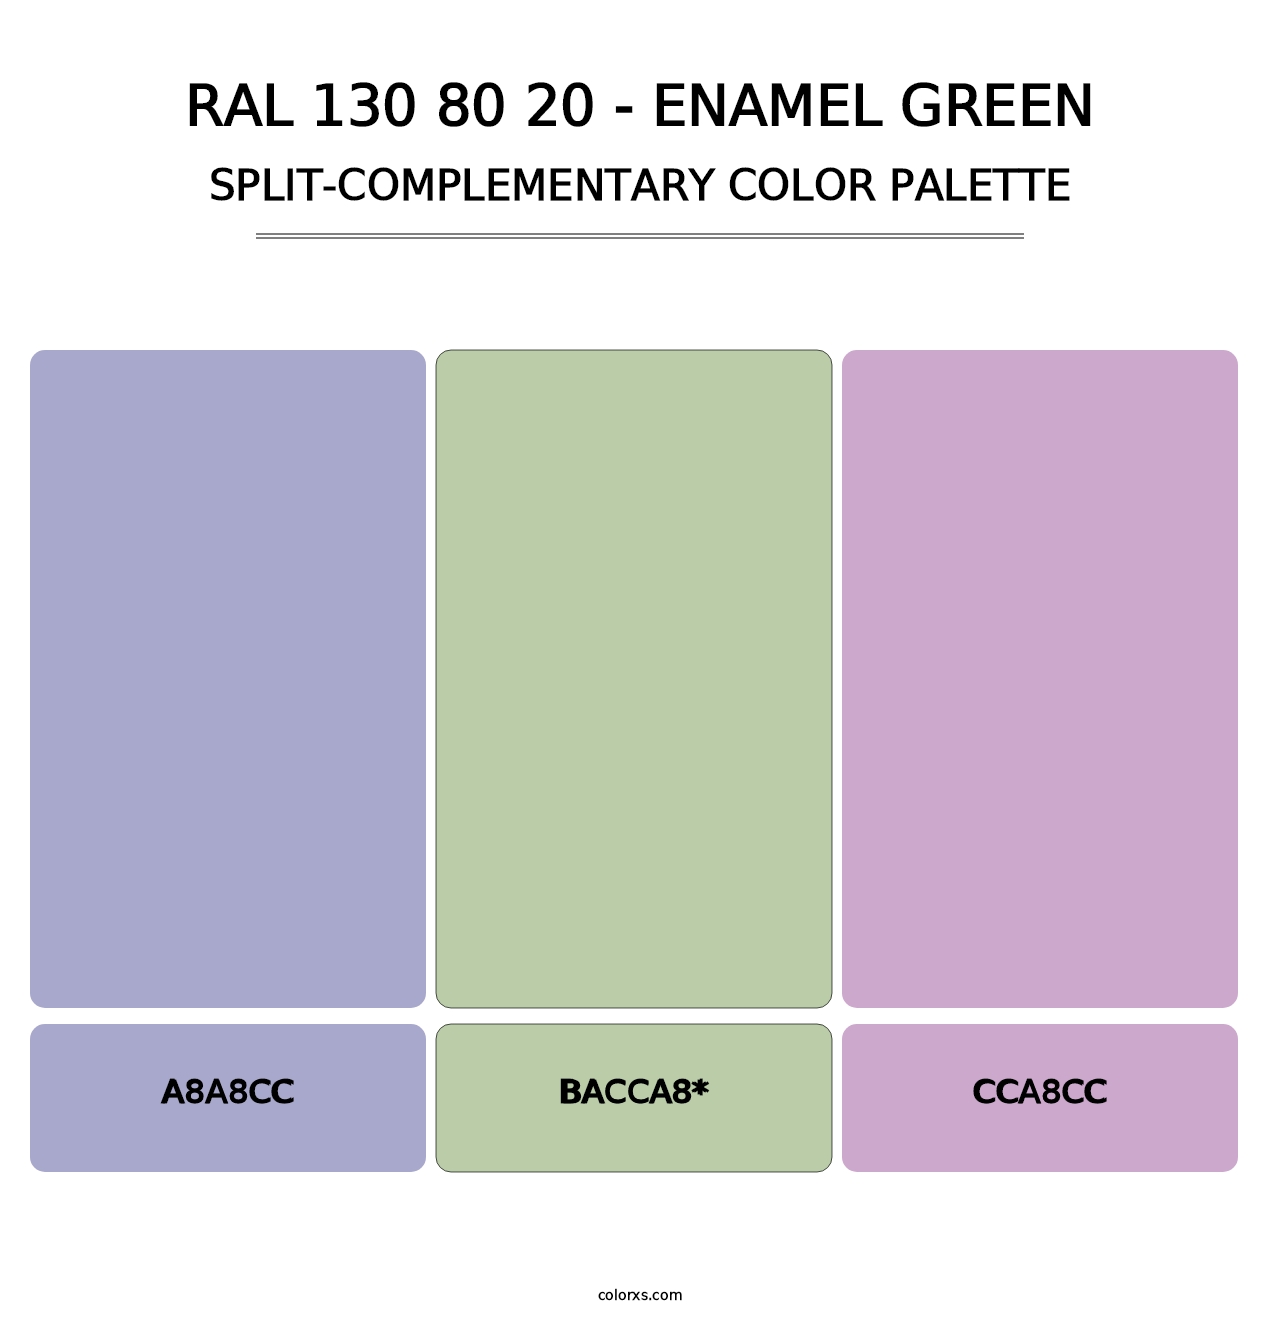 RAL 130 80 20 - Enamel Green - Split-Complementary Color Palette